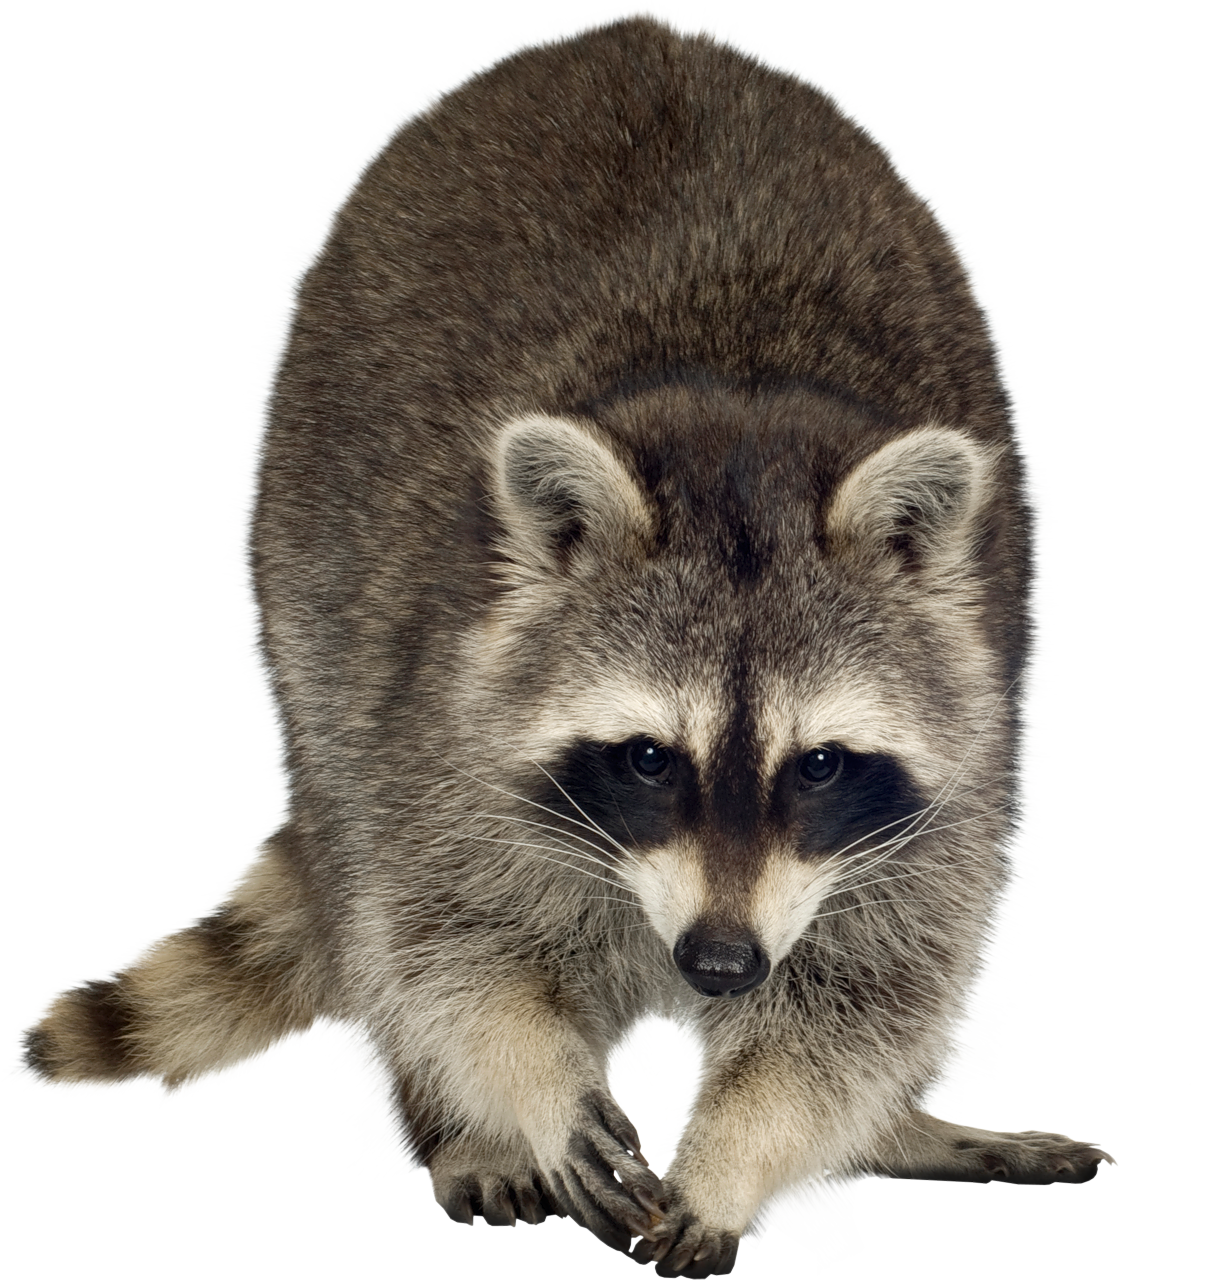 Raccoon PNG Free Download